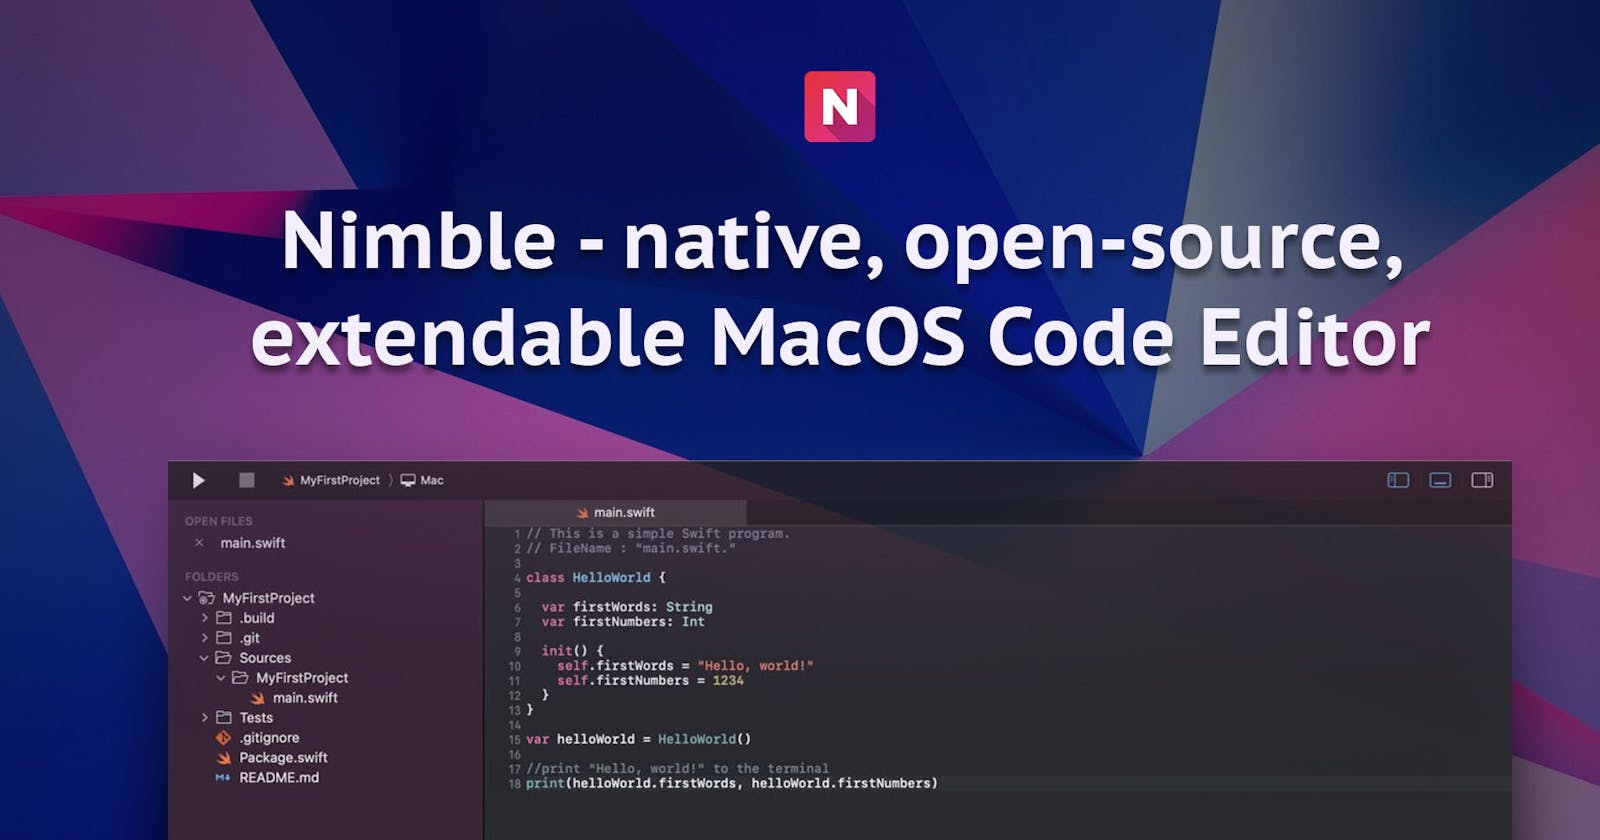 Nimble - native, open-source, extendable MacOS Code Editor